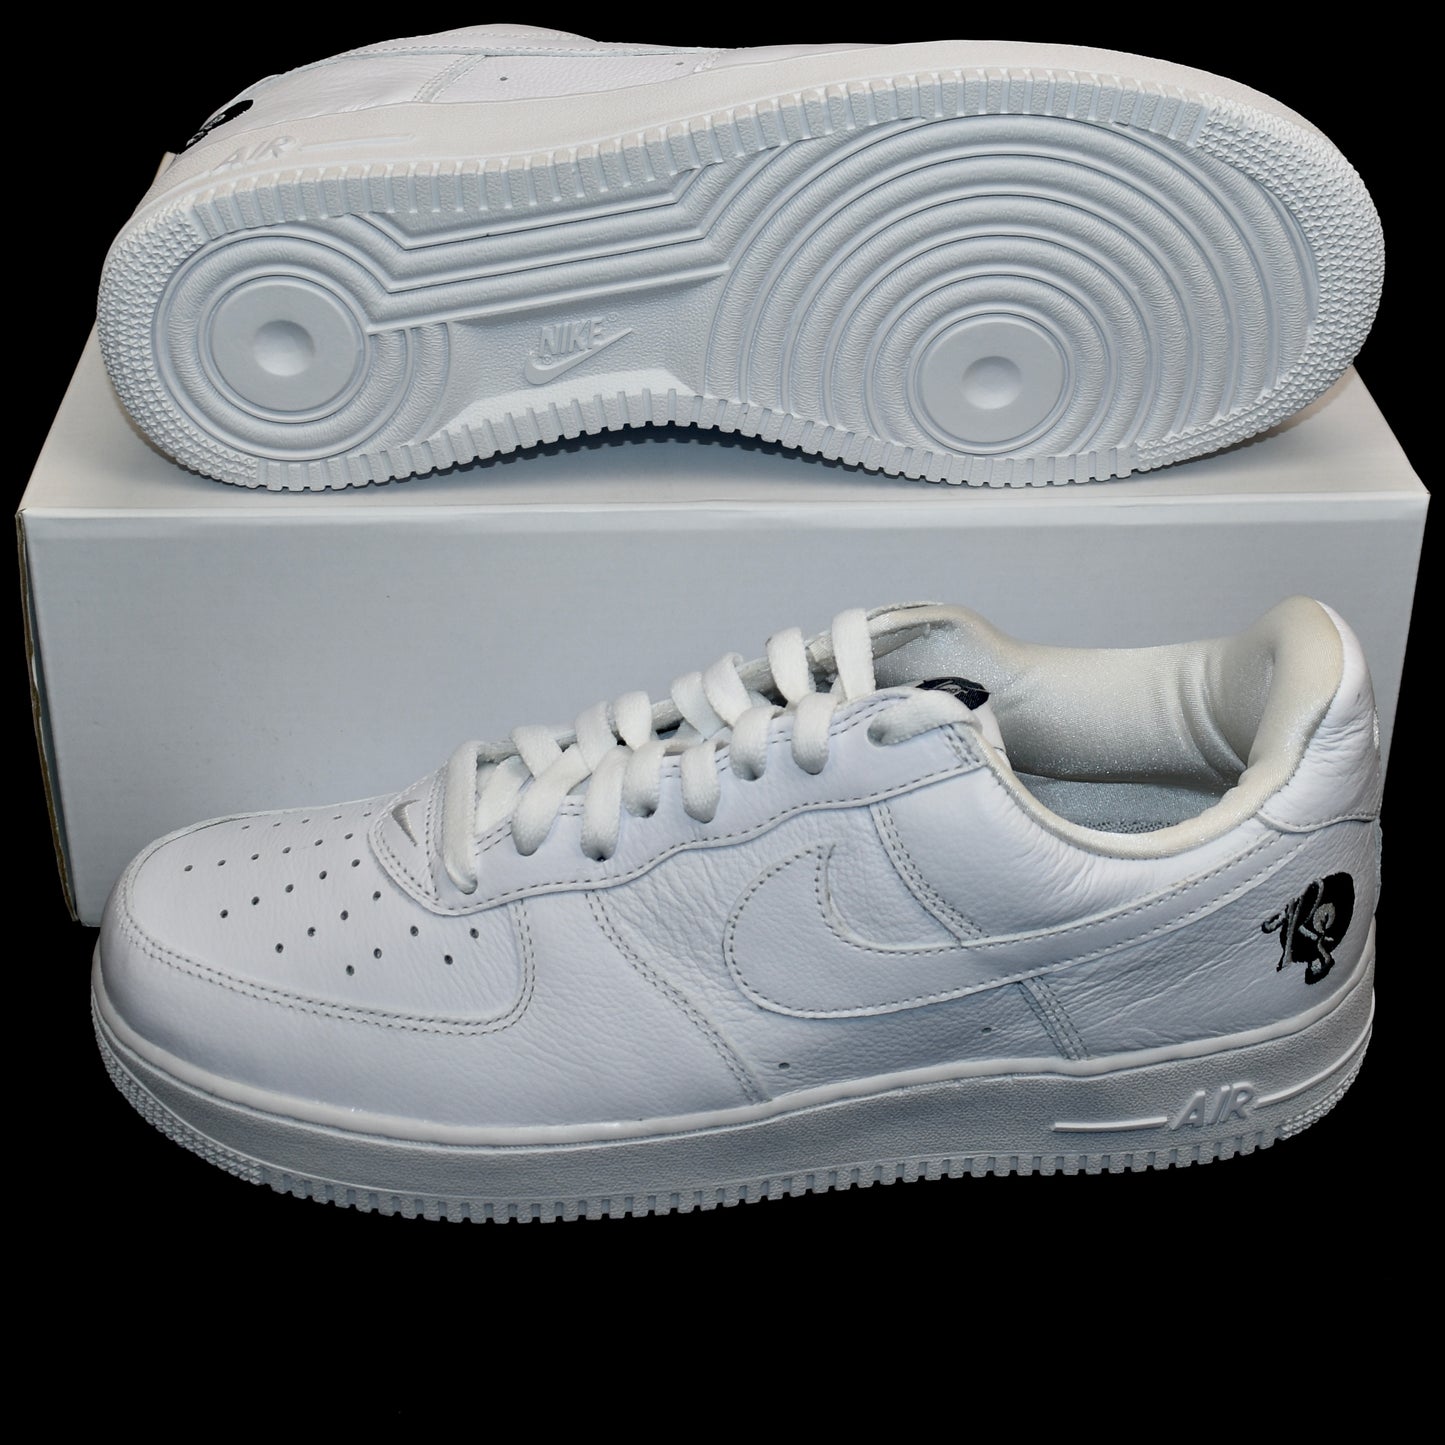 Nike - Air Force 1 '07 Rocafella 'AF100' (White)